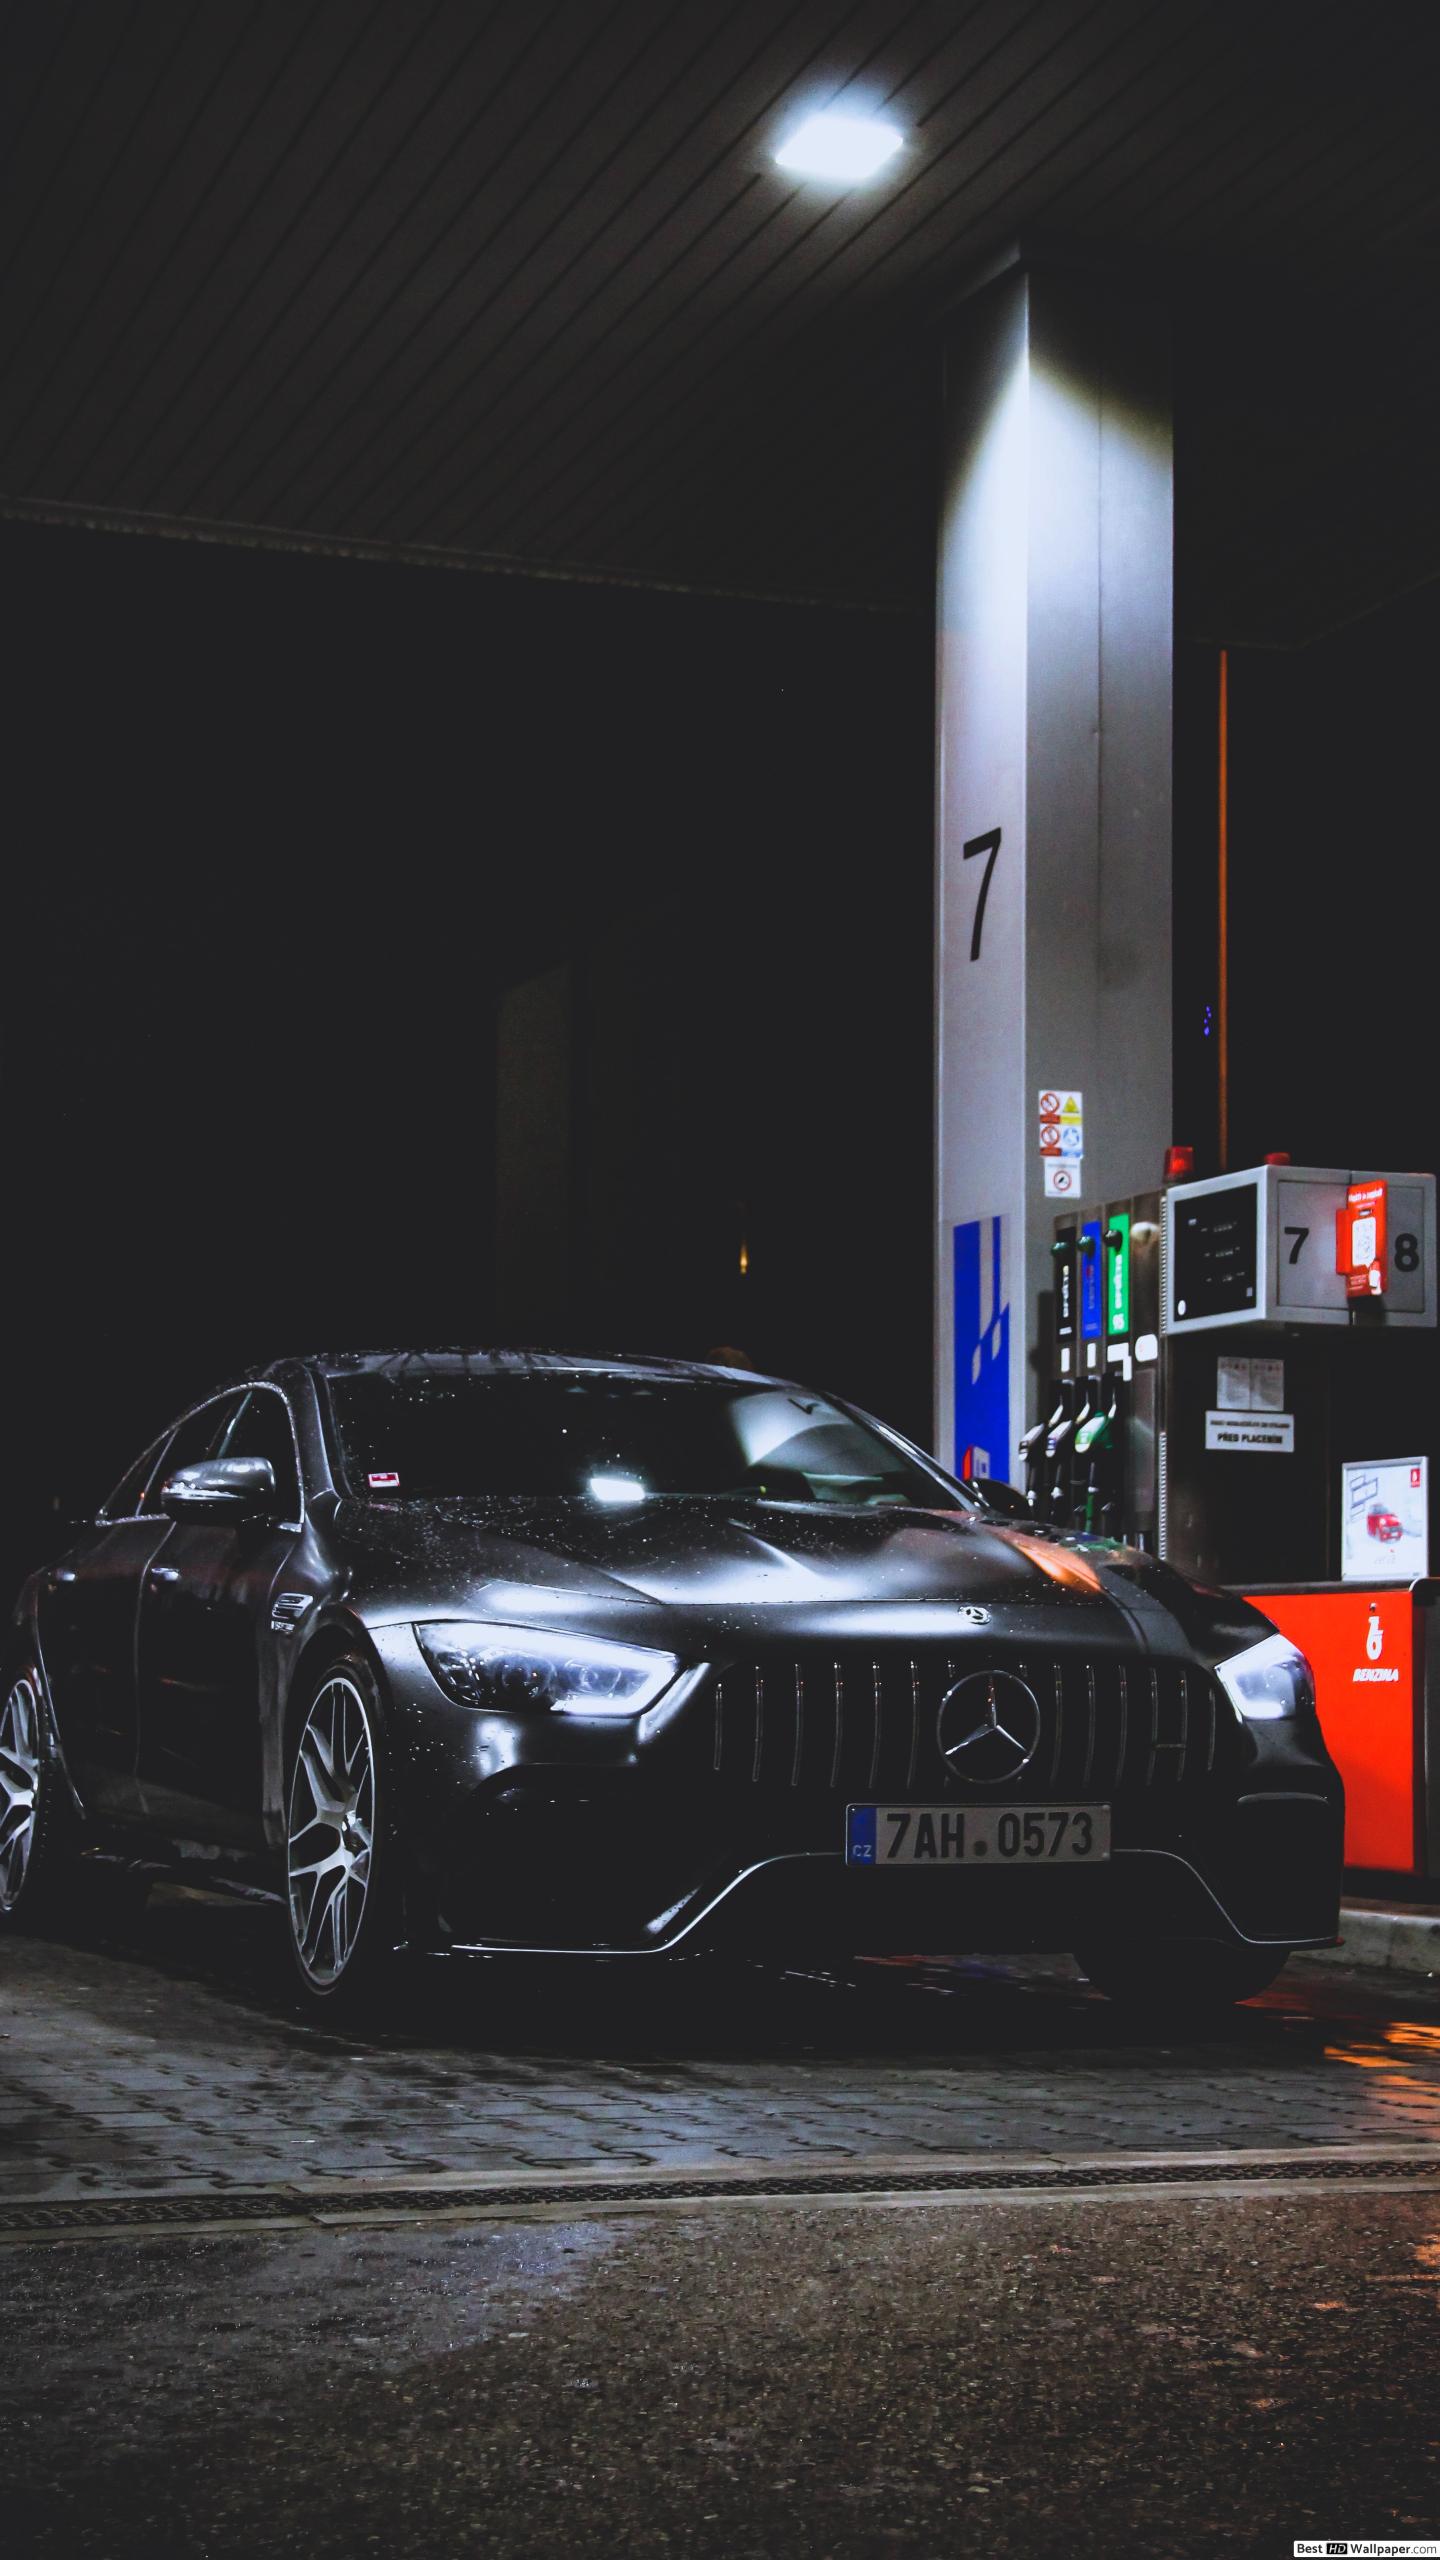 Black Mercedes Benz Car At Gas Station At Night HD Wallpaper Download